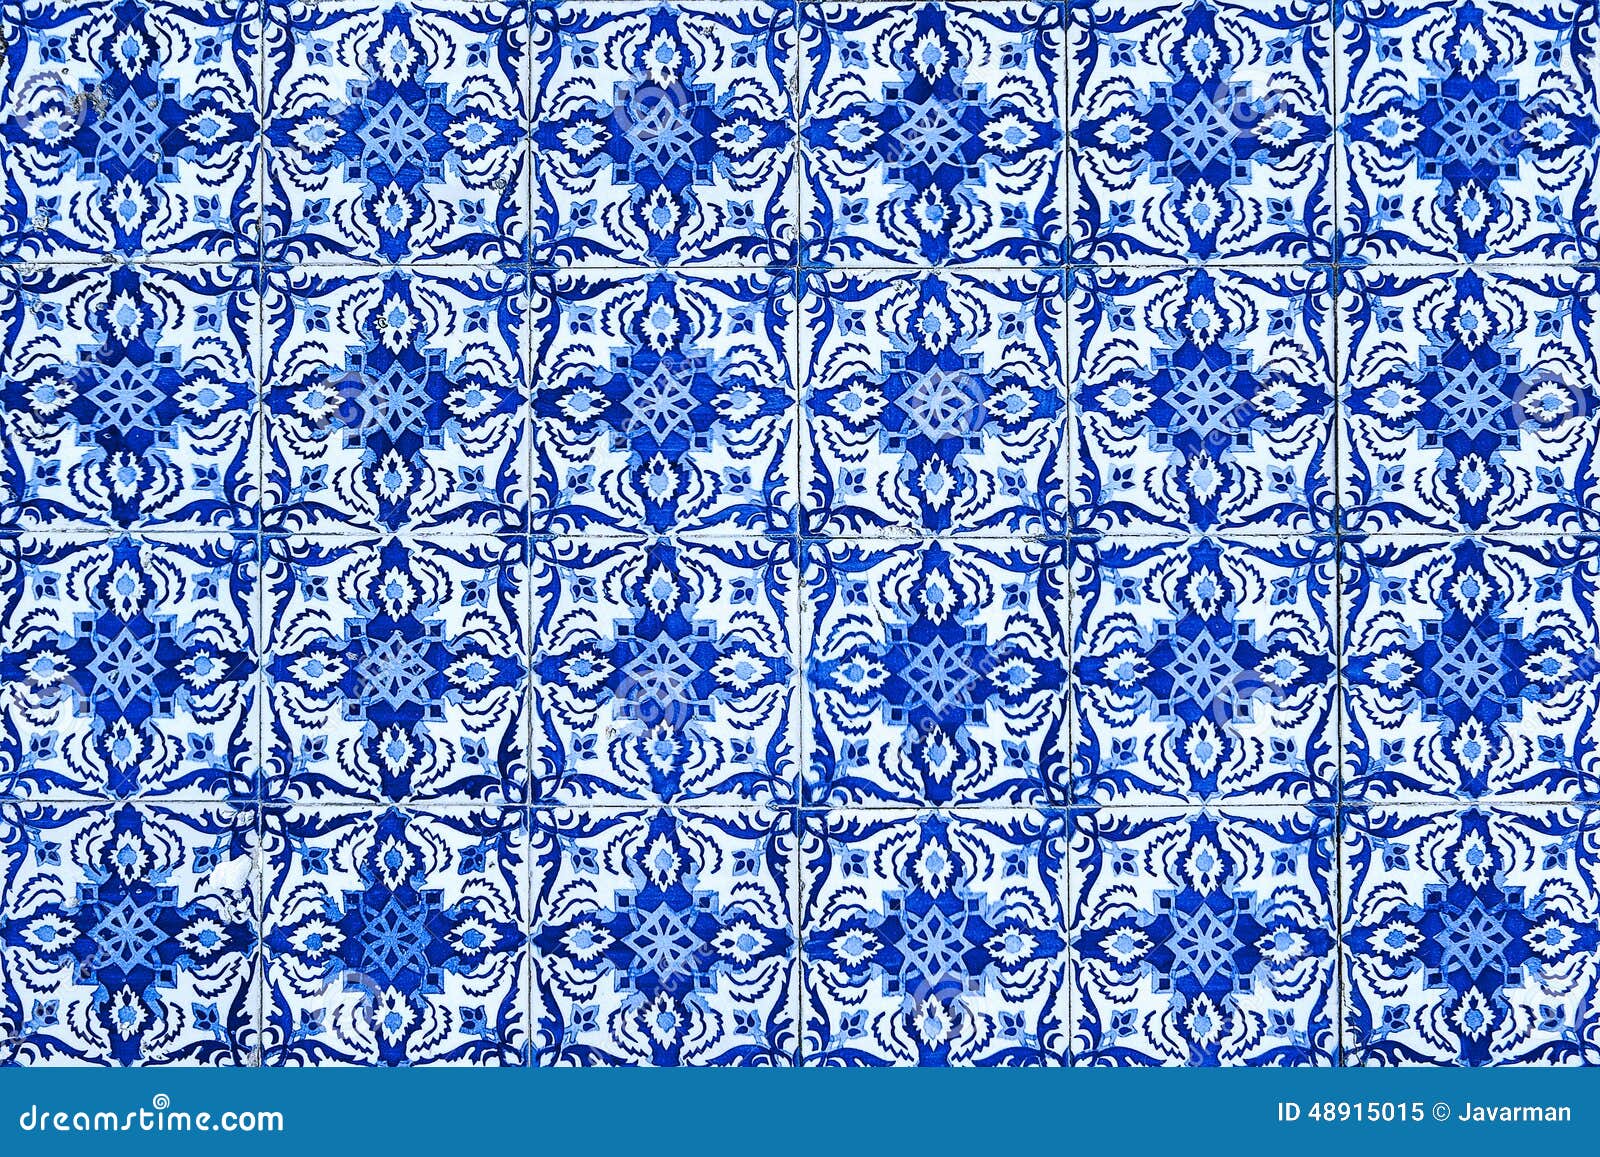 azulejos, traditional portuguese tiles